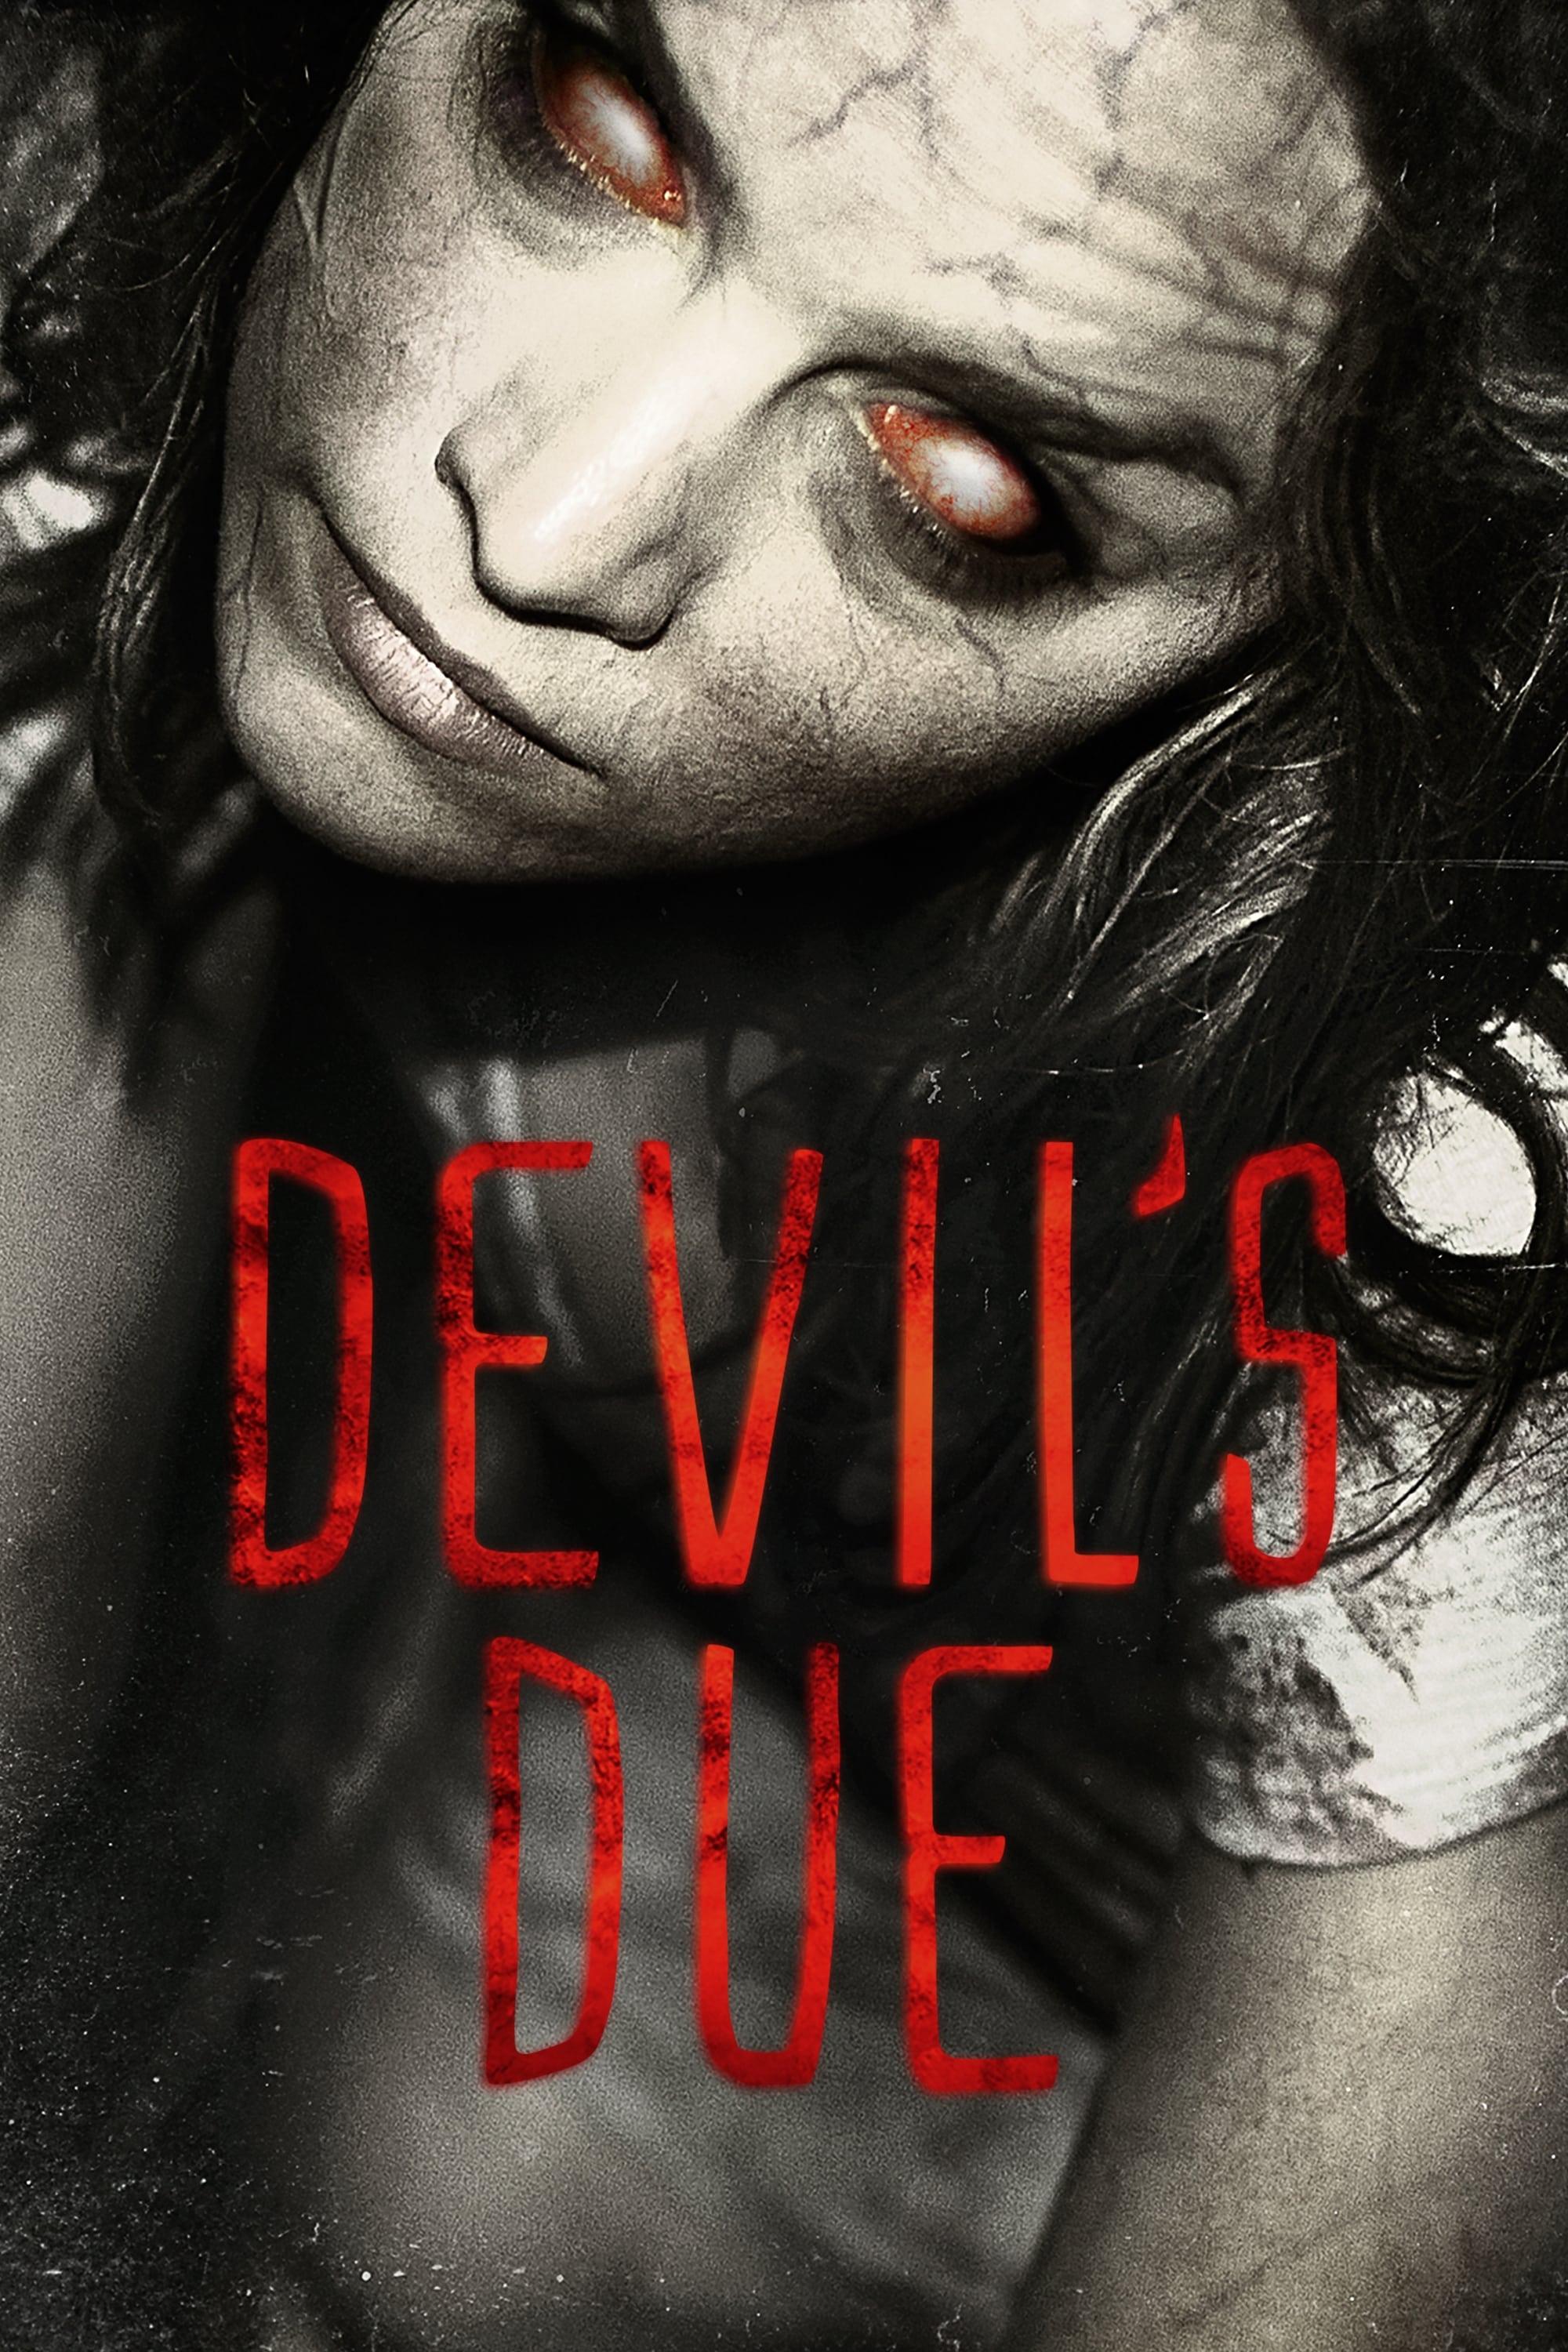 Devil's Due poster